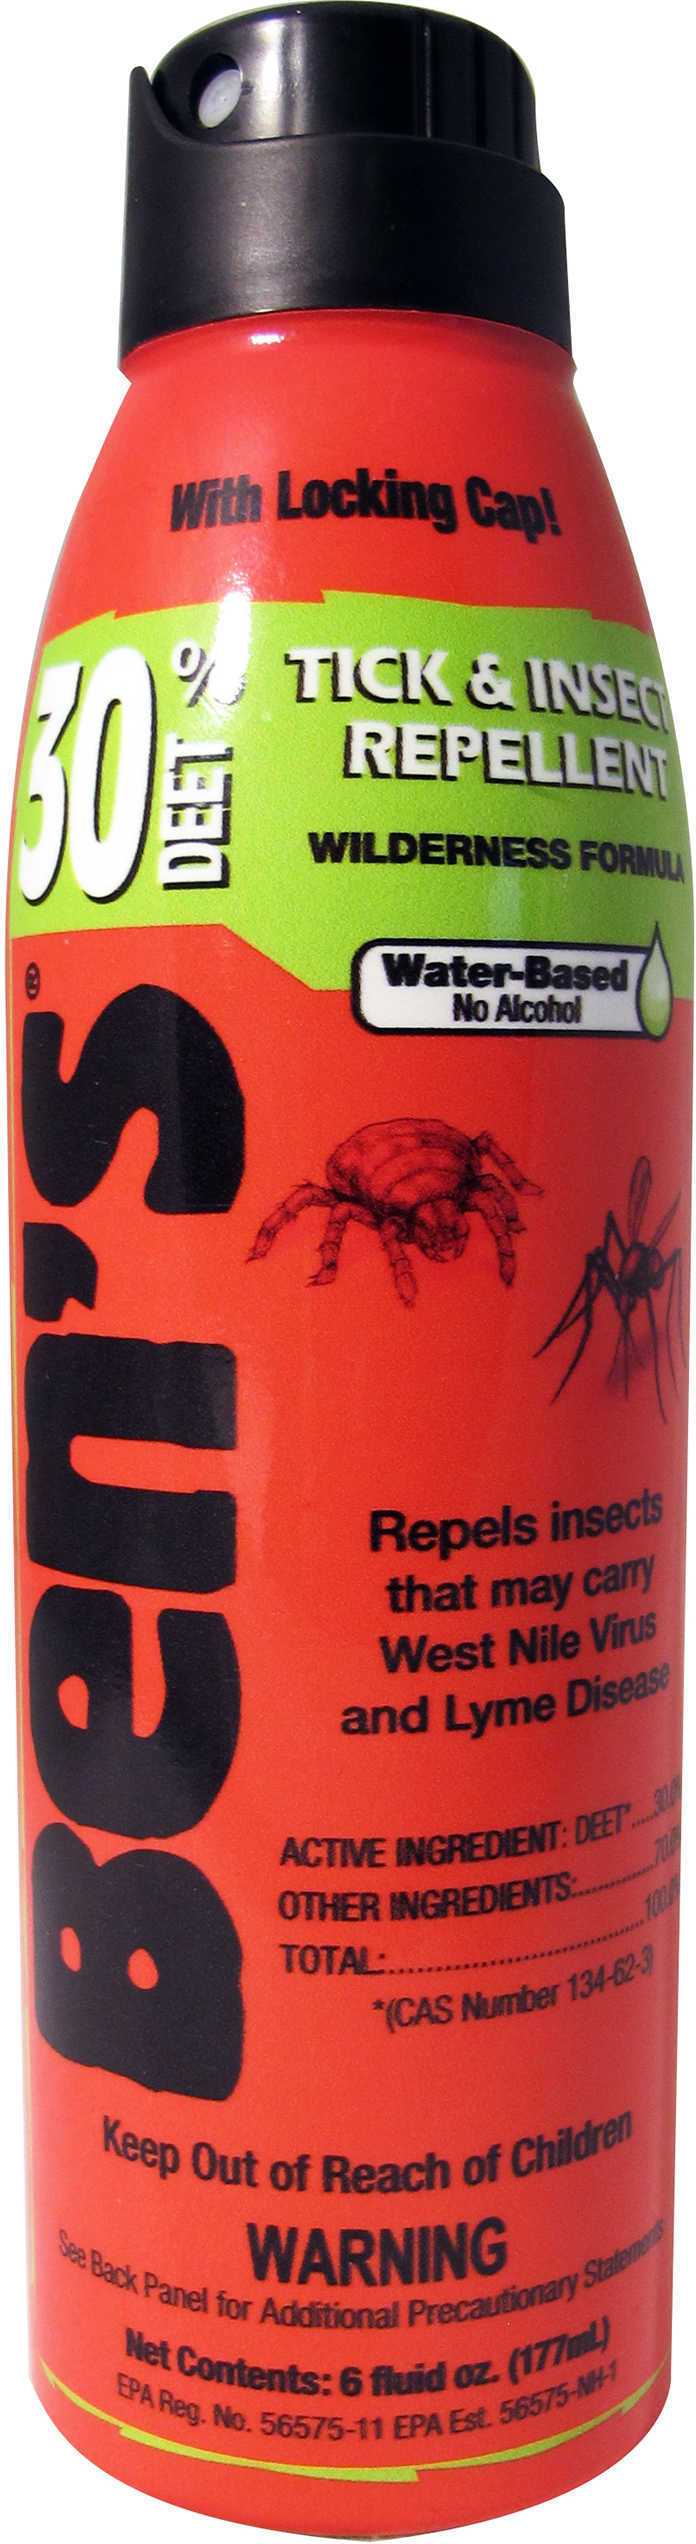 Ben's 30 6Oz Eco-Spray Insect Repellent